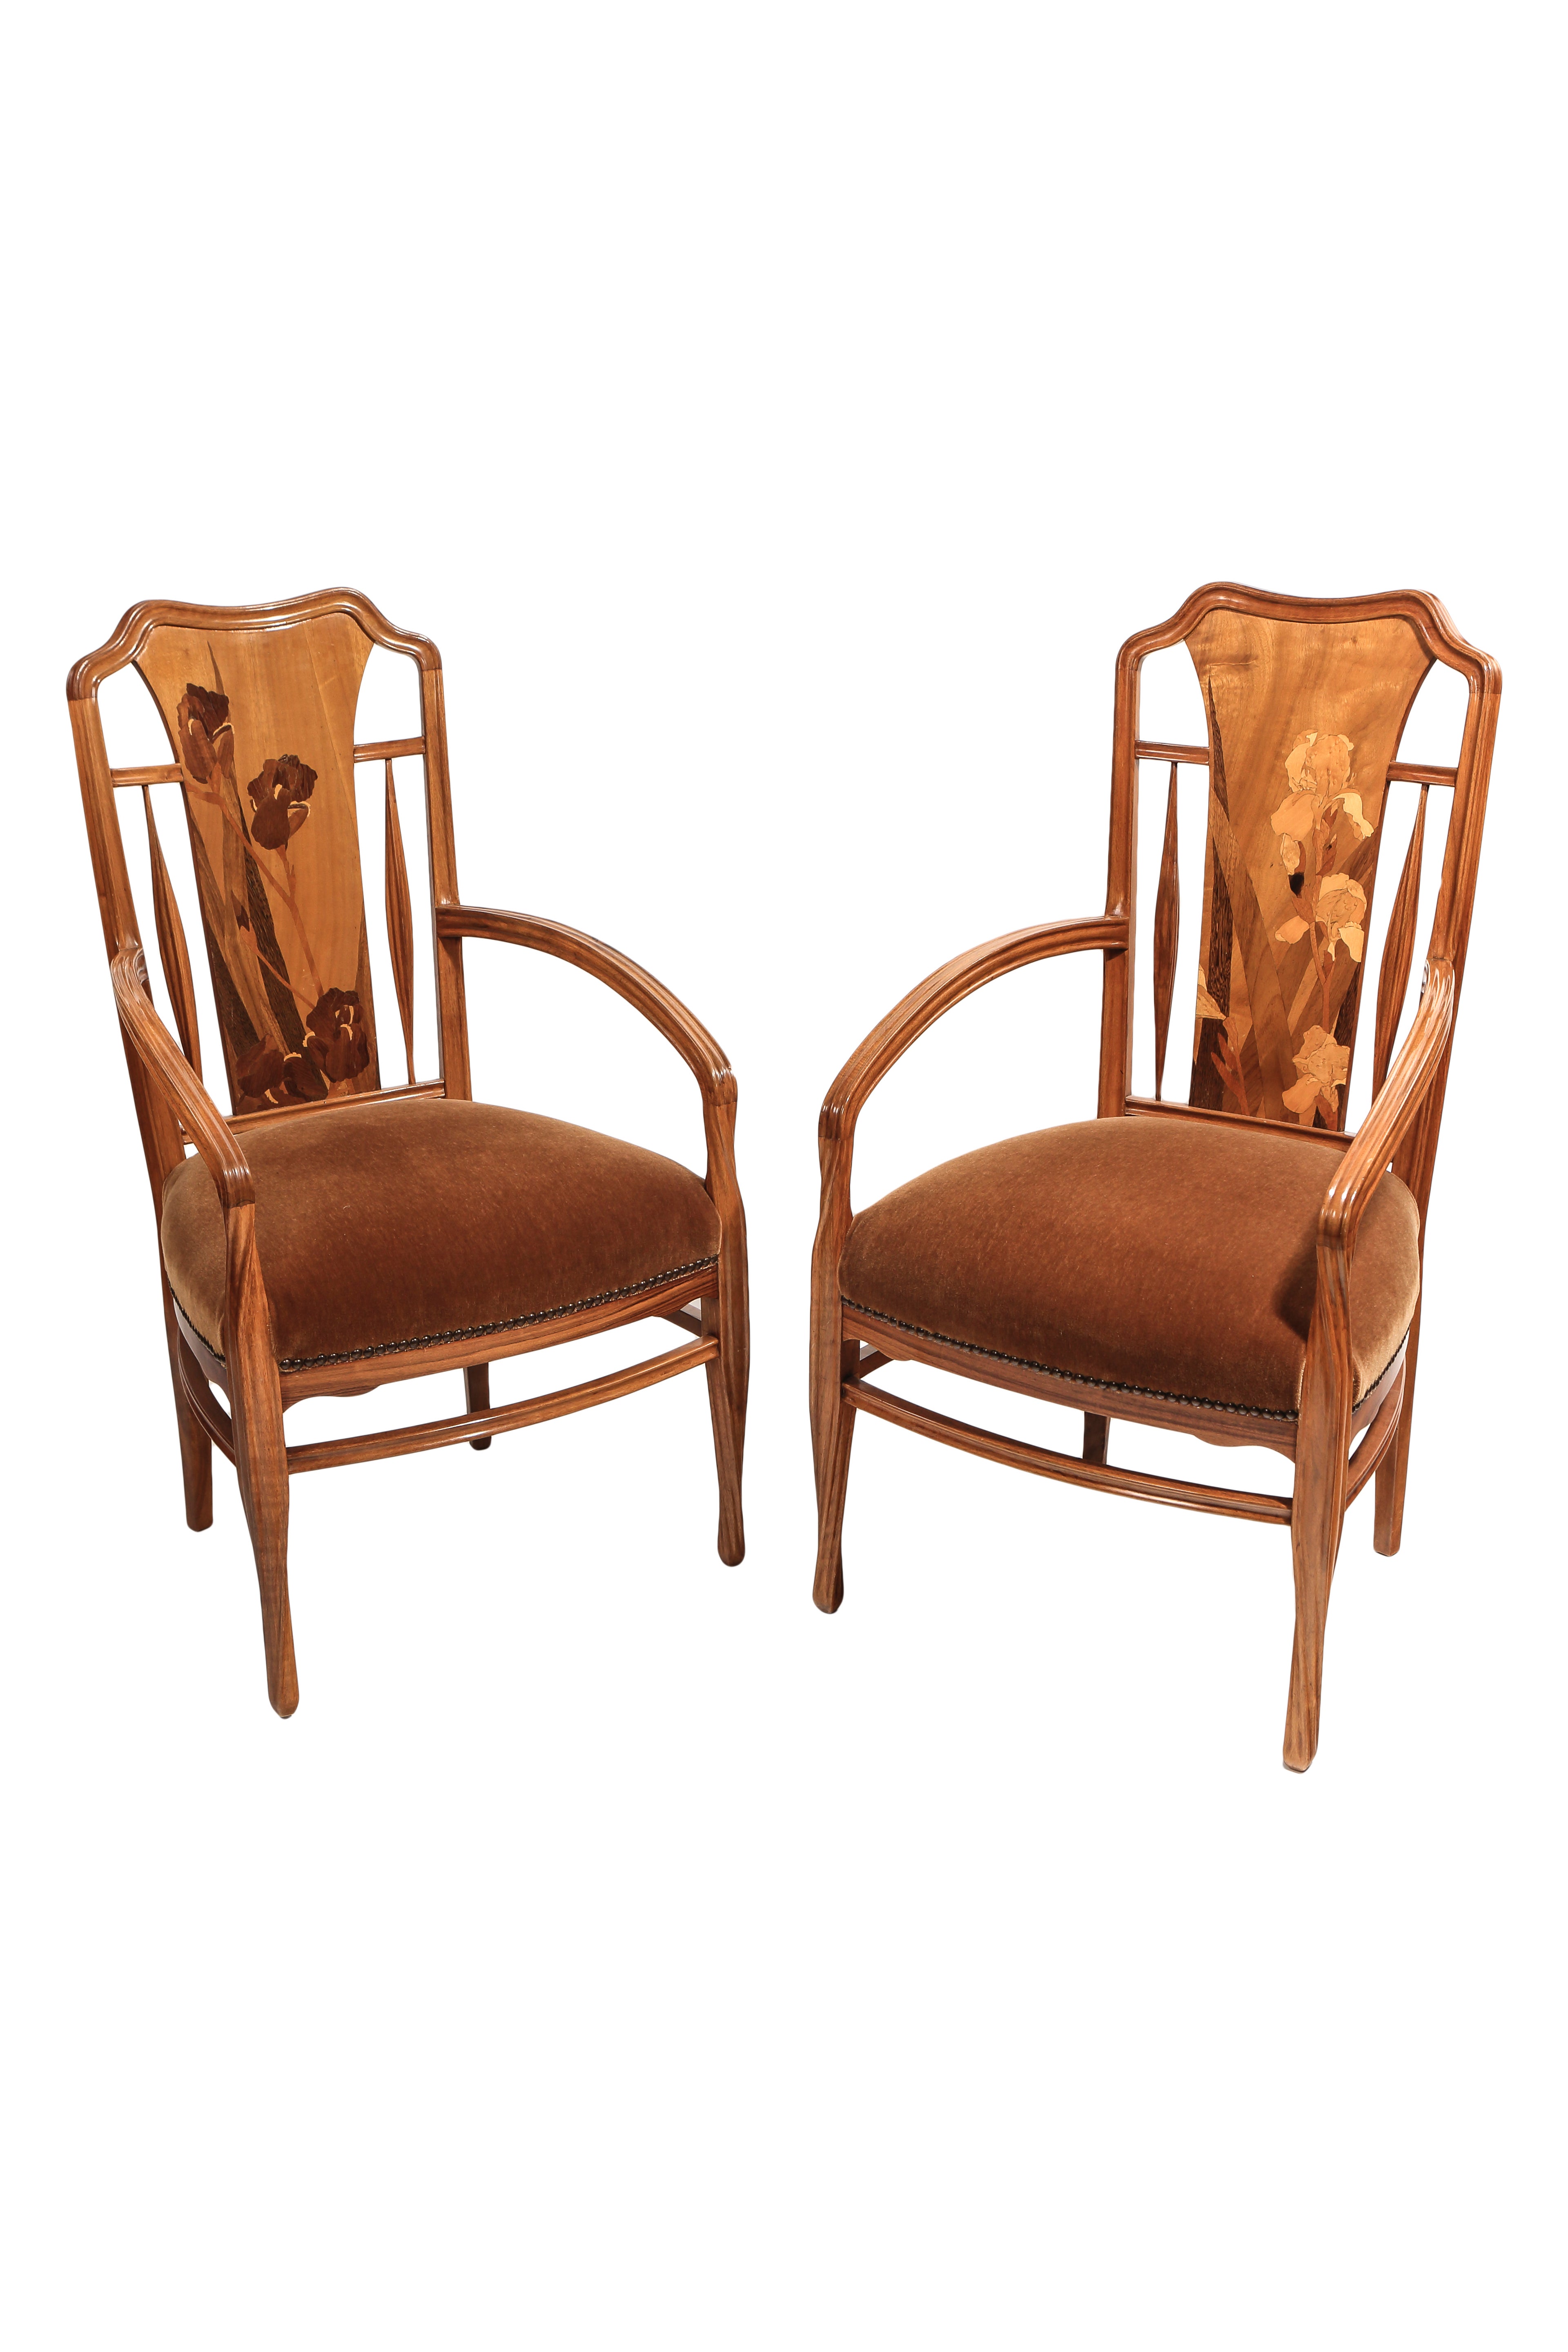 French Art Nouveau Arm Chairs by, Louis Majorelle 